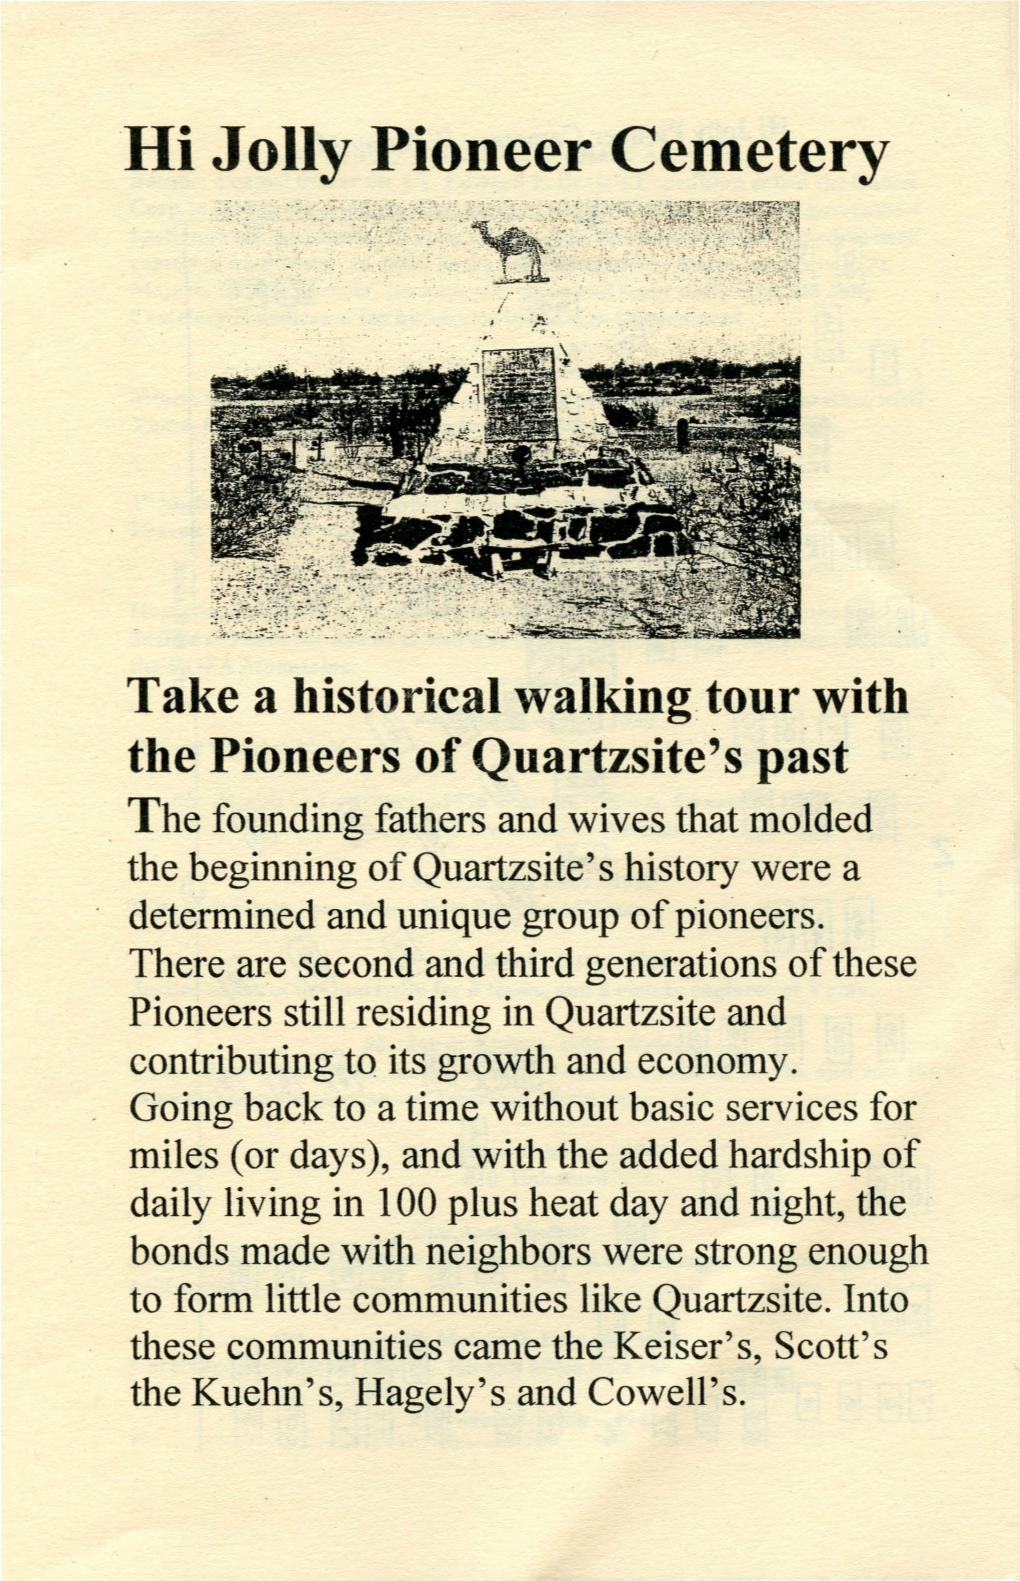 Guide to Hi Jolly Pioneer Cemetery, Quartzsite, Arizona